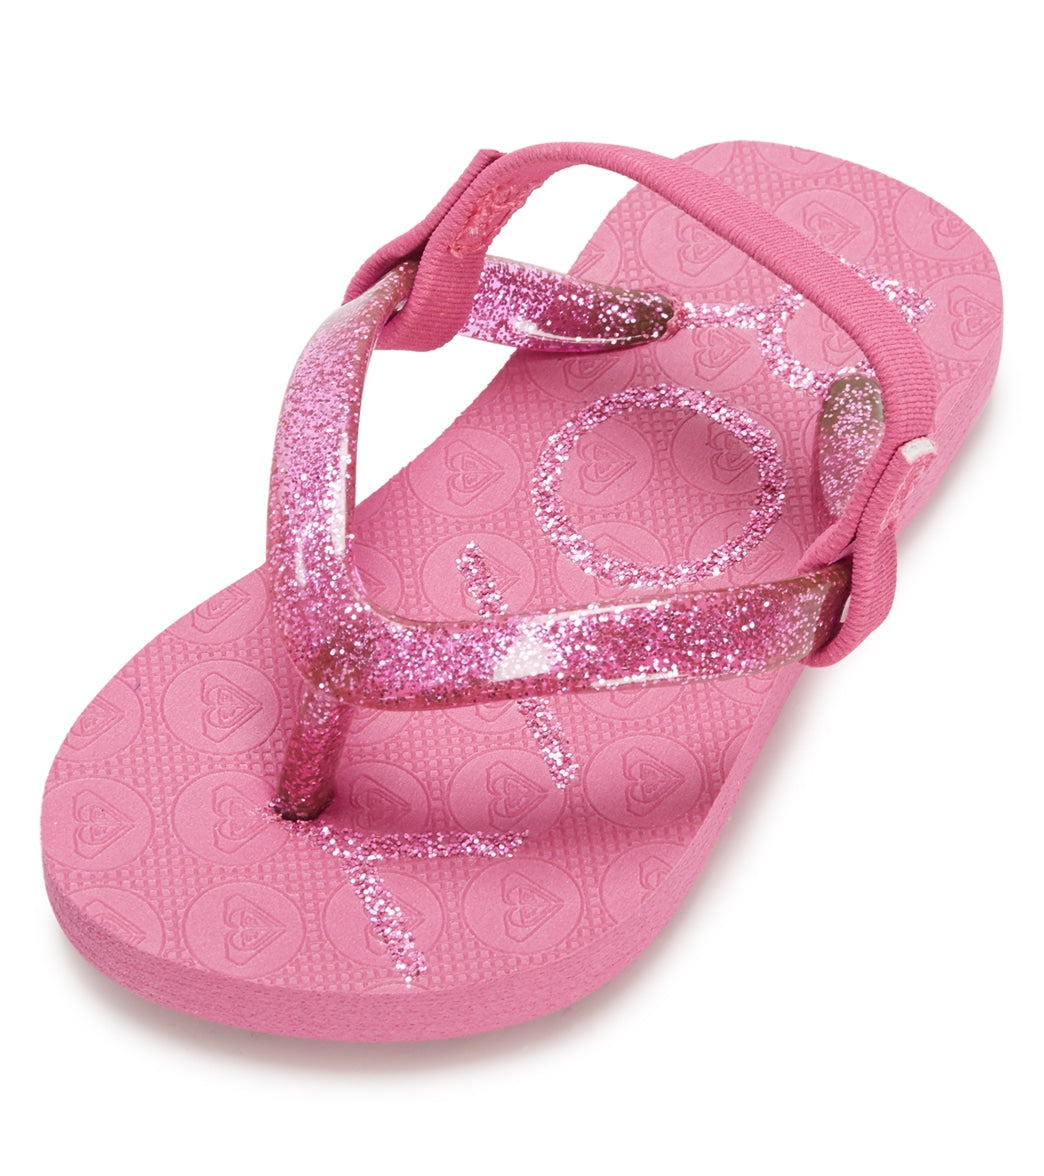 Roxy Girls Viva Sparkle Glitter Summer Beach Holiday Sandals Flip Flops